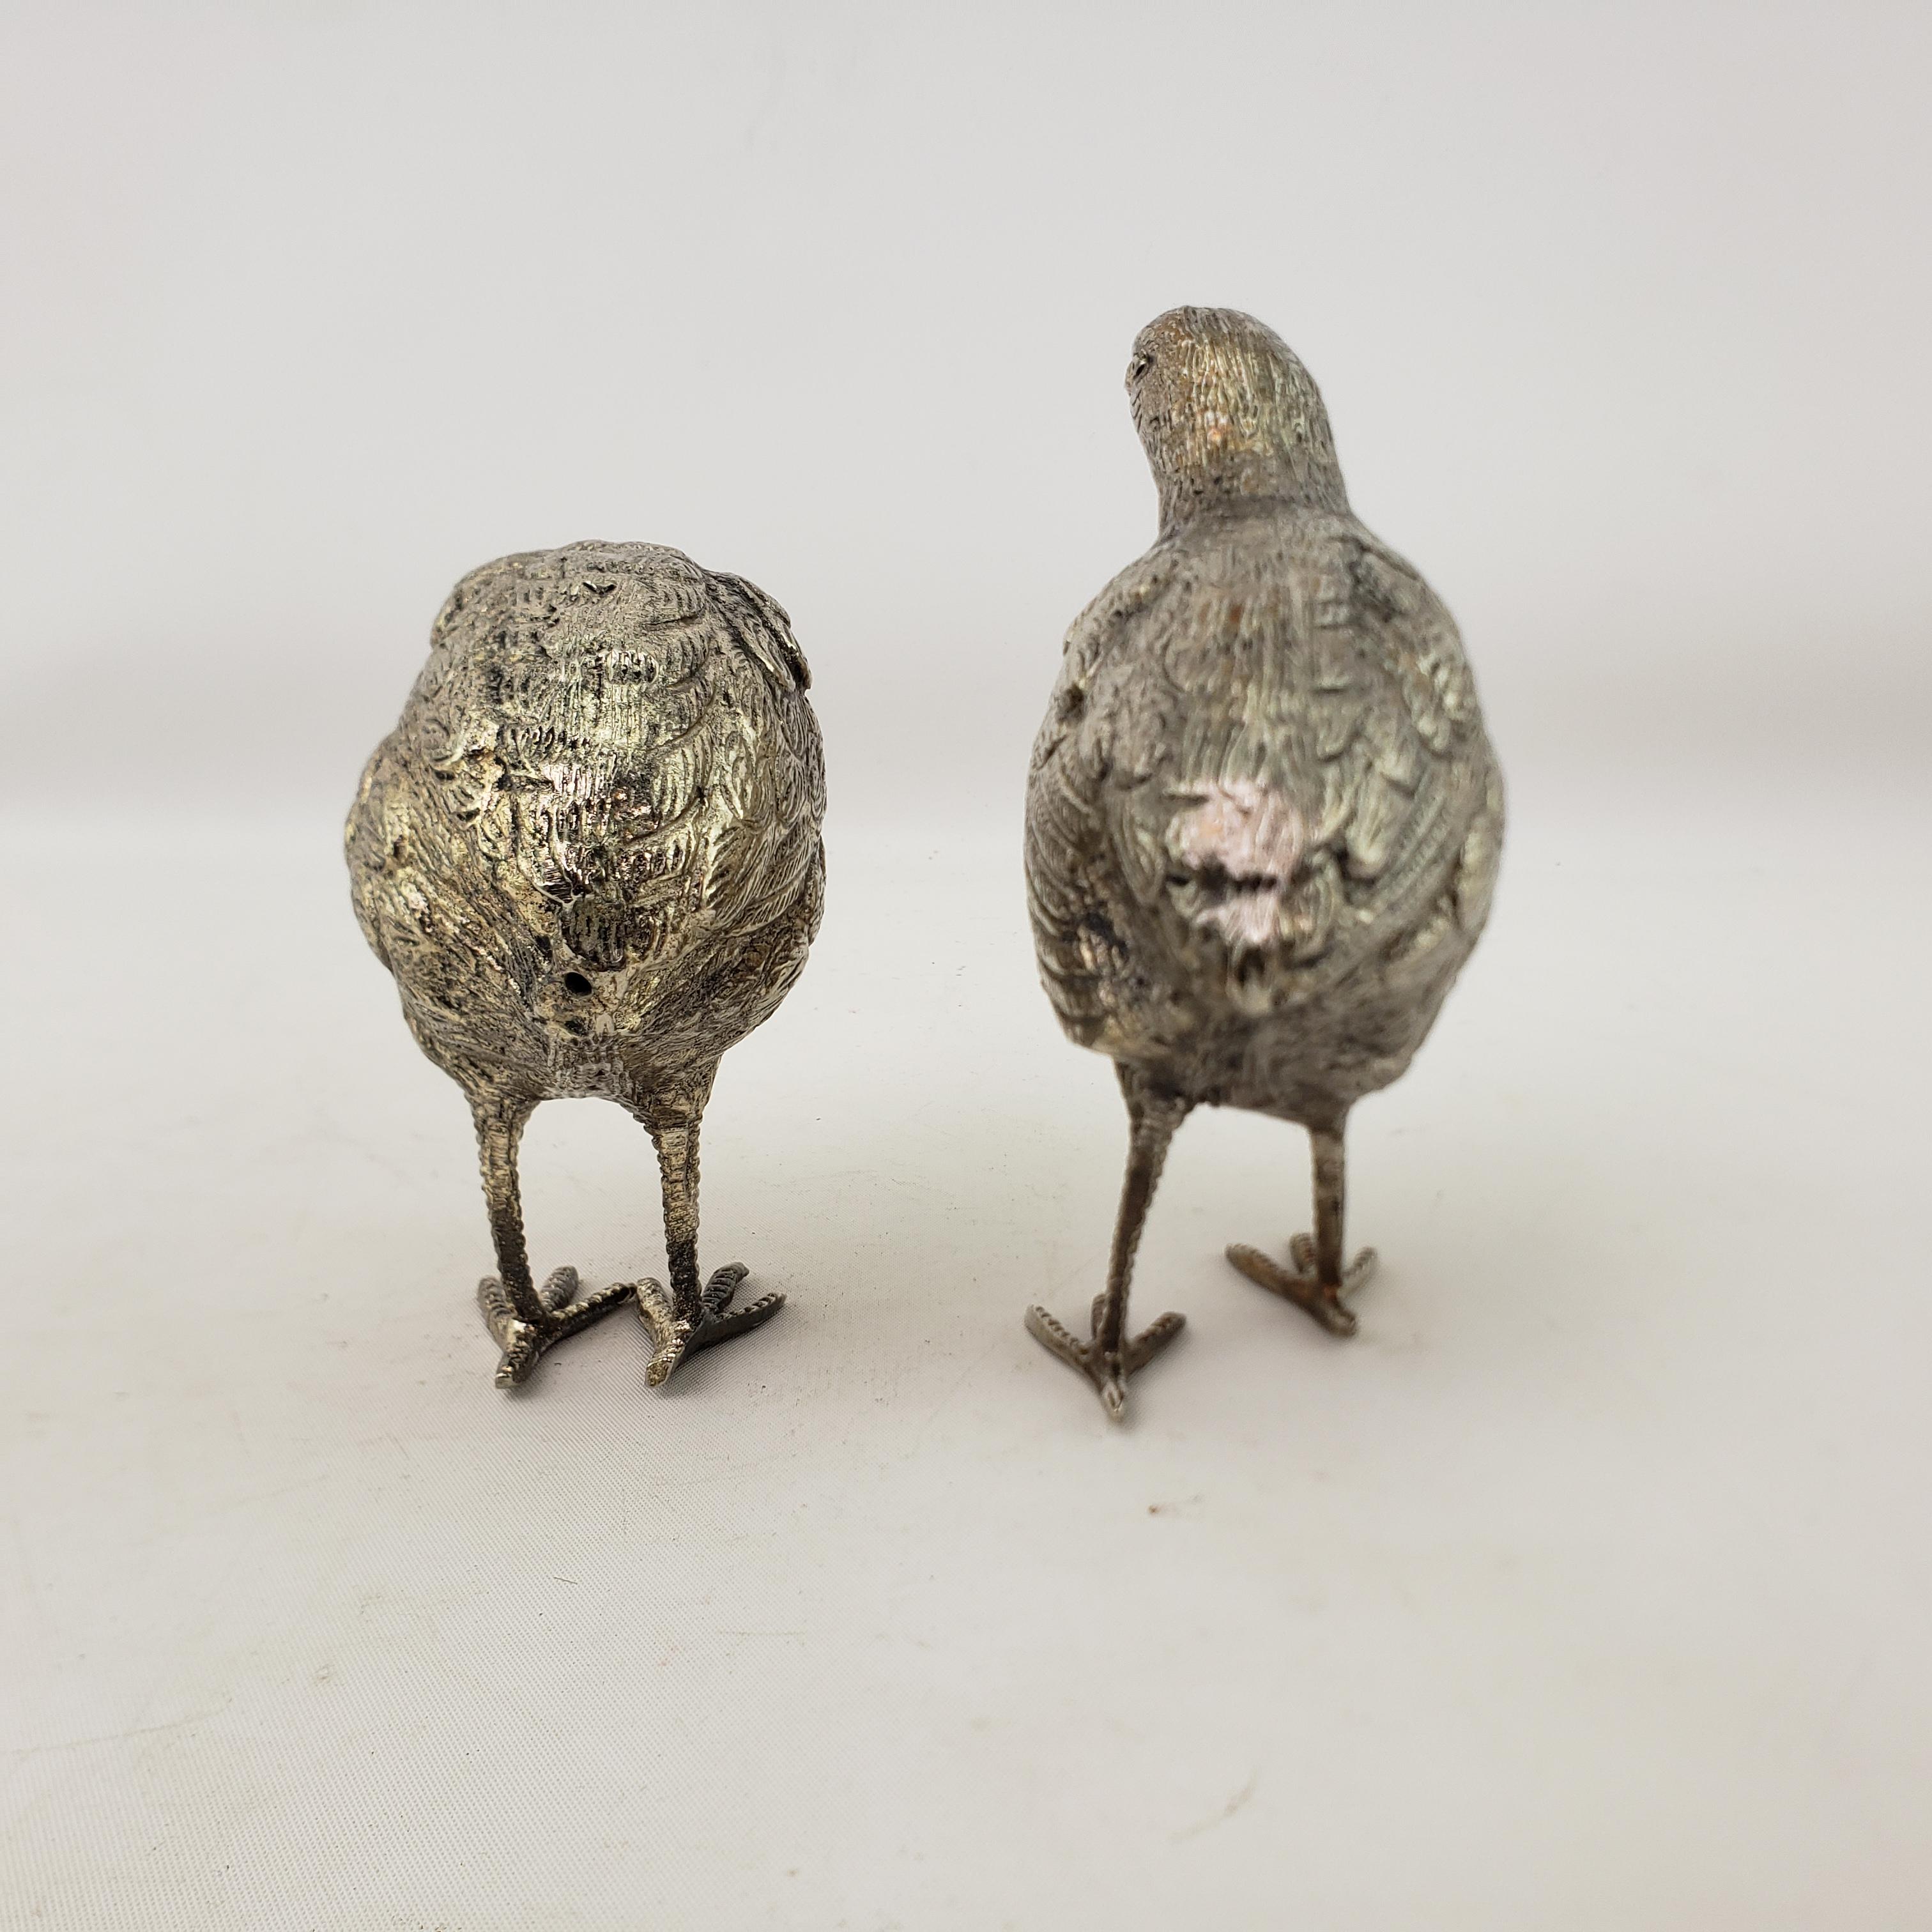 Italian Pair of Antique Silver Plated Quail or Game Bird Decorative Sculptures